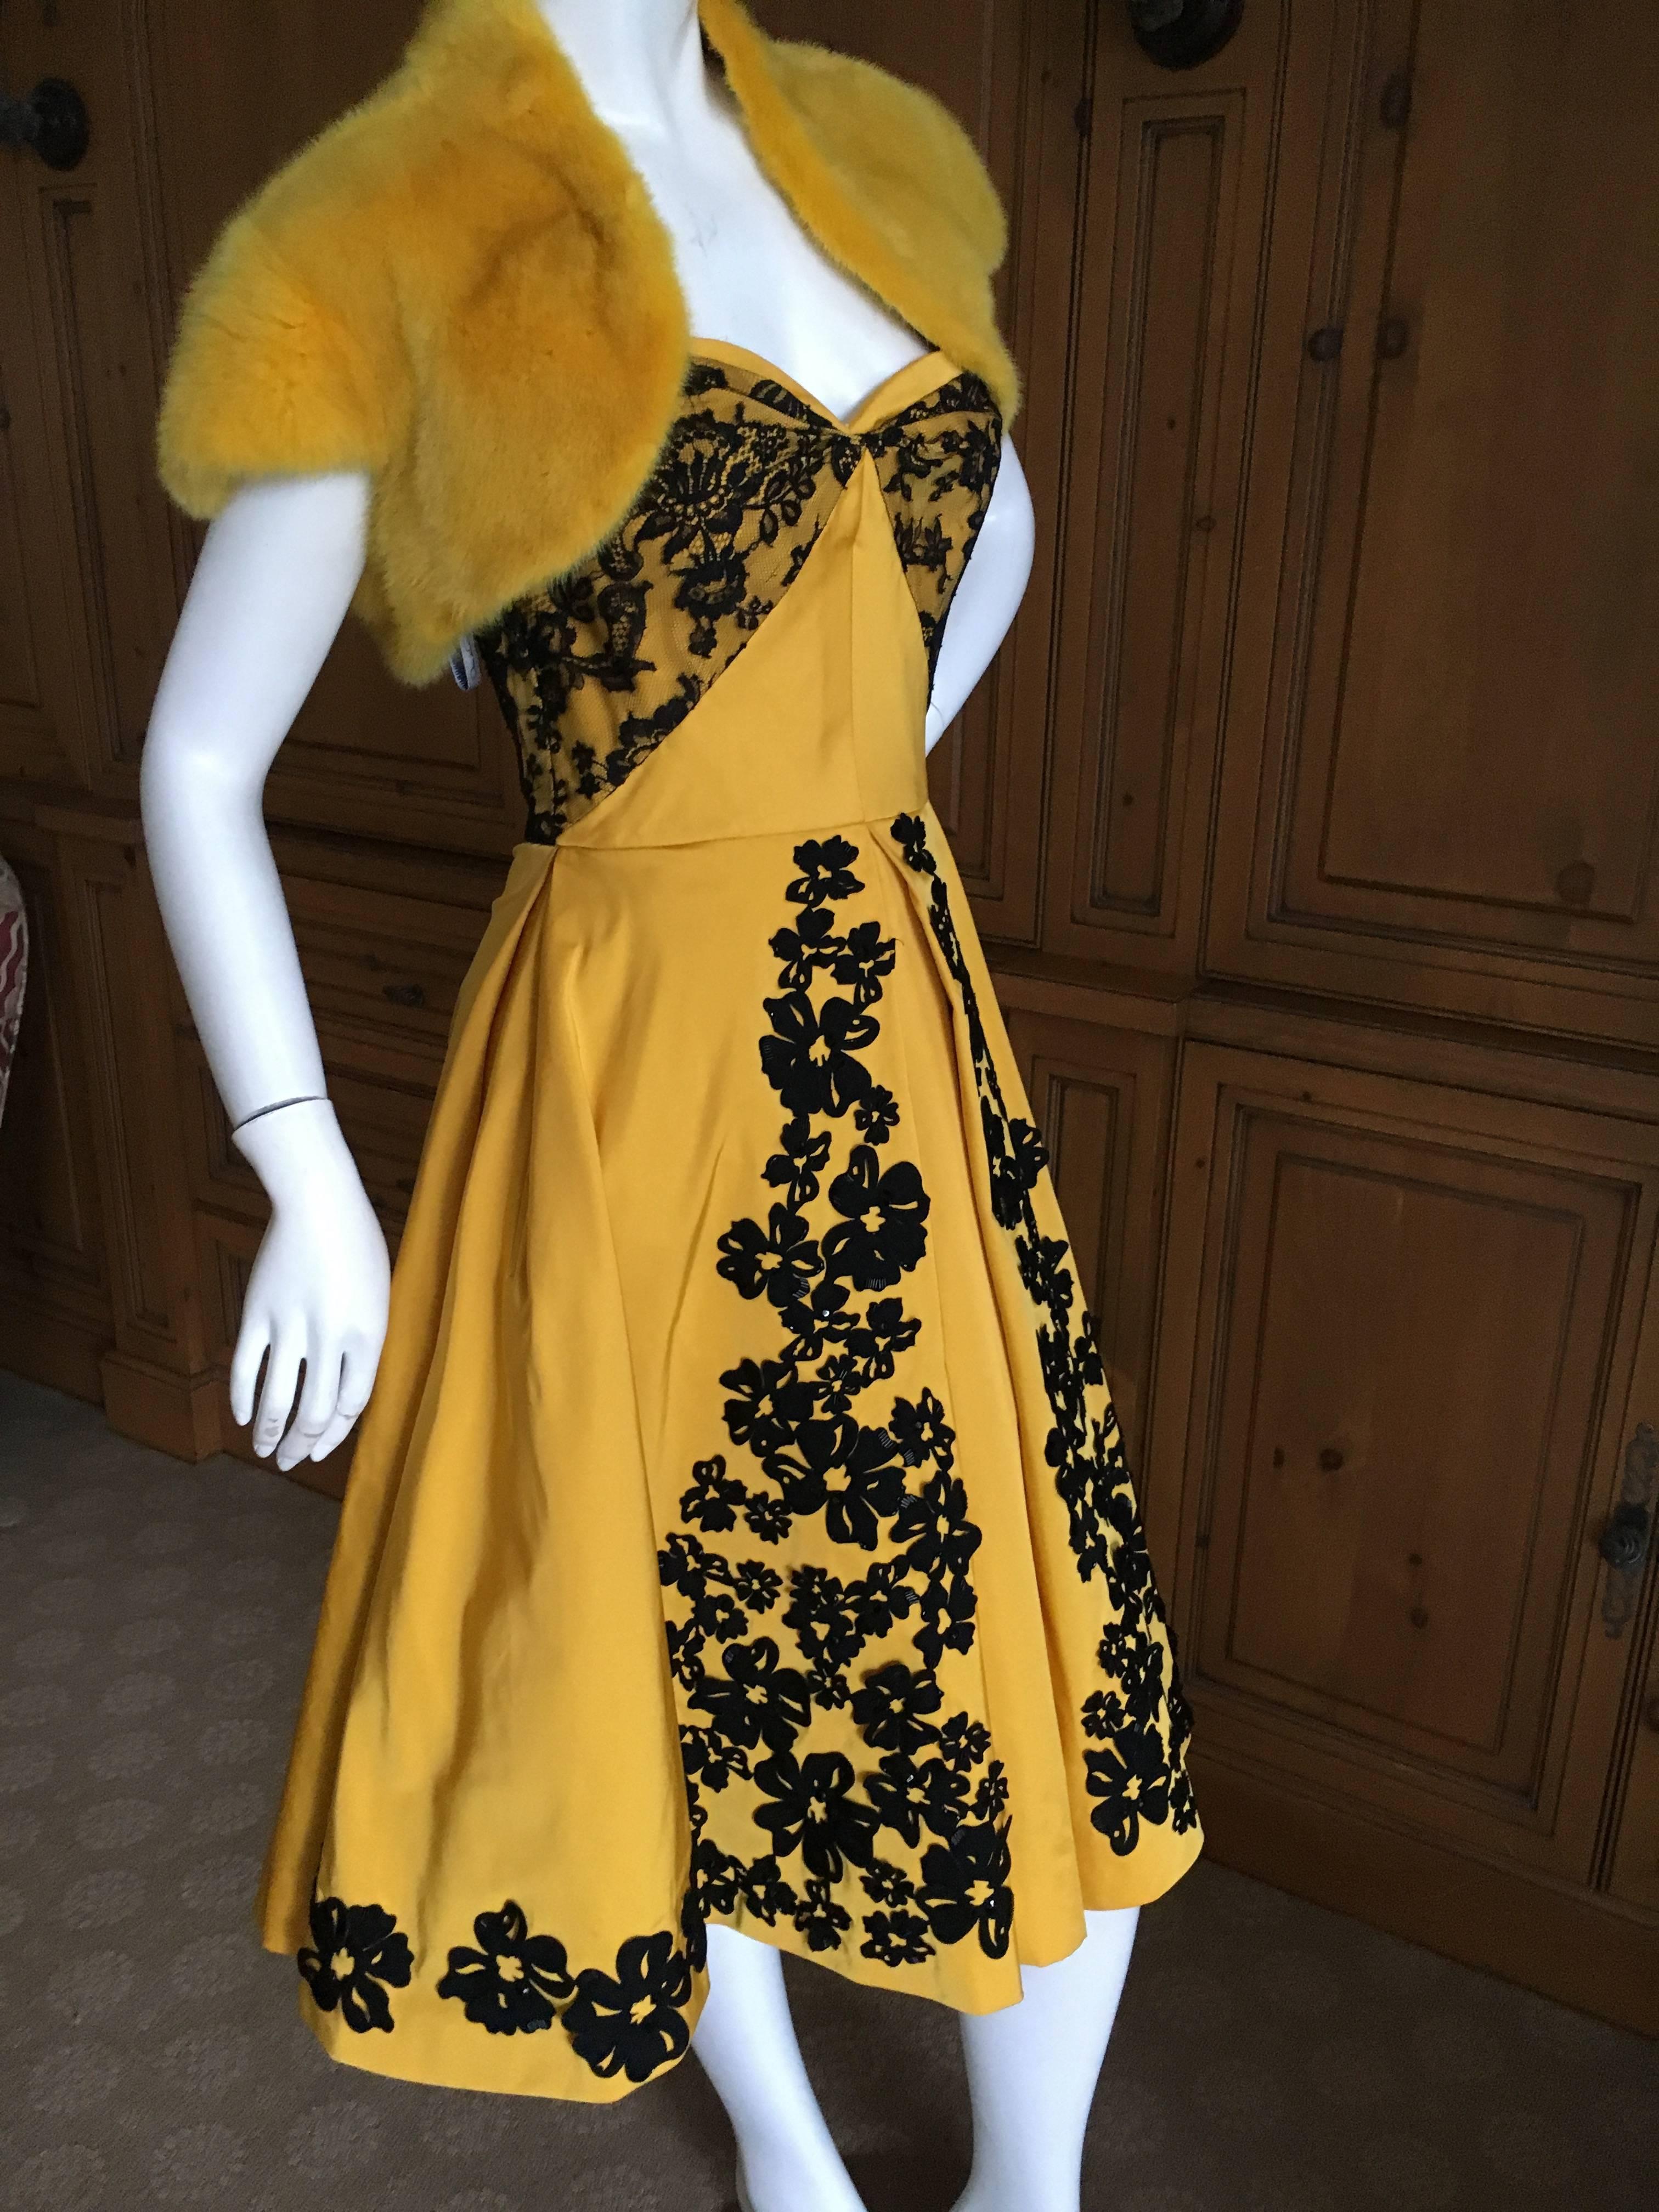 Women's Oscar de la Renta Marigold Floral Strapless Evening Dress with Mink Shrug For Sale